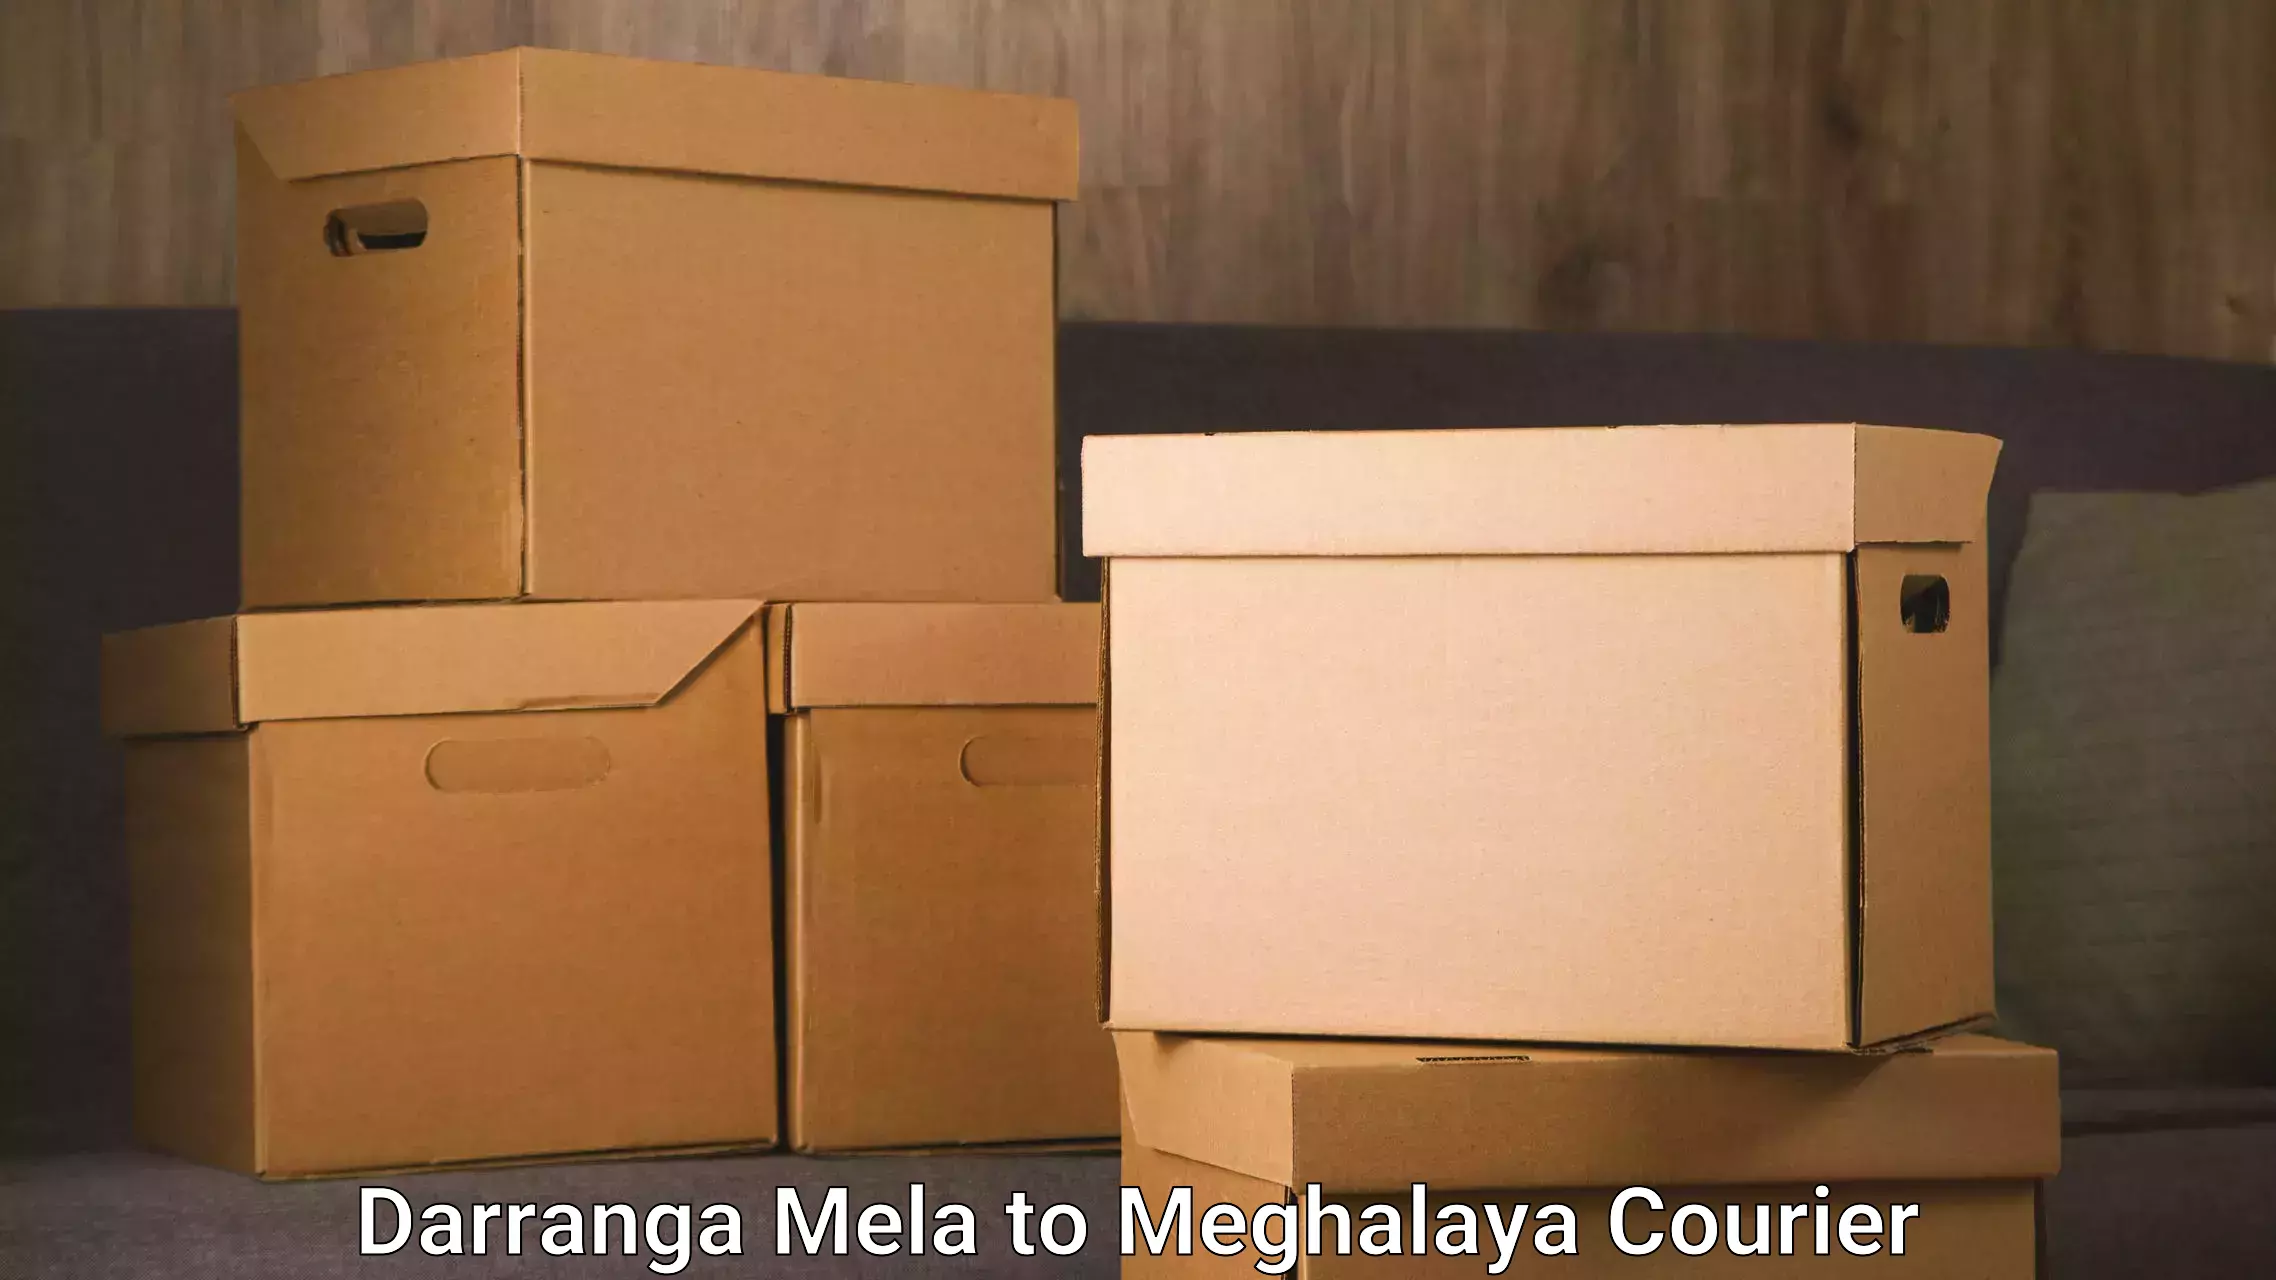 Reliable package handling Darranga Mela to Shillong